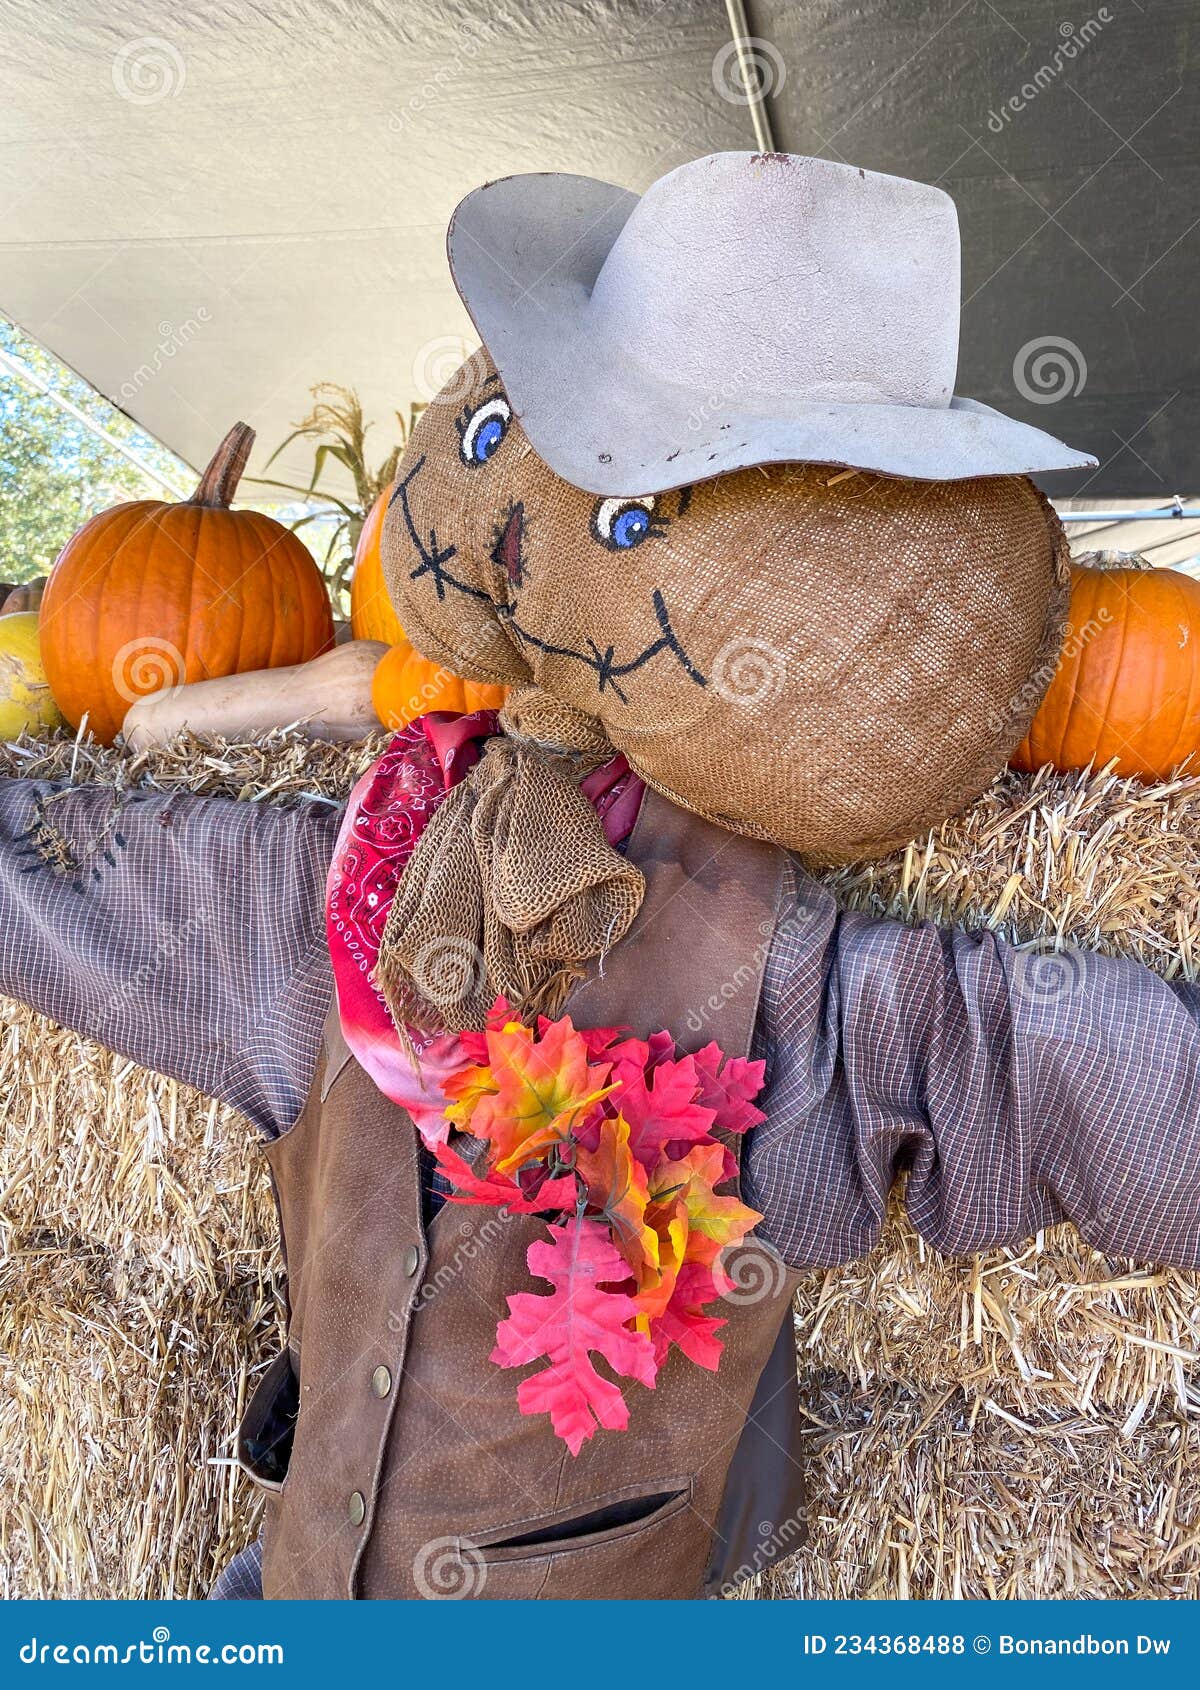 Top 104+ Images seasonal adventures pumpkin patch photos Full HD, 2k, 4k